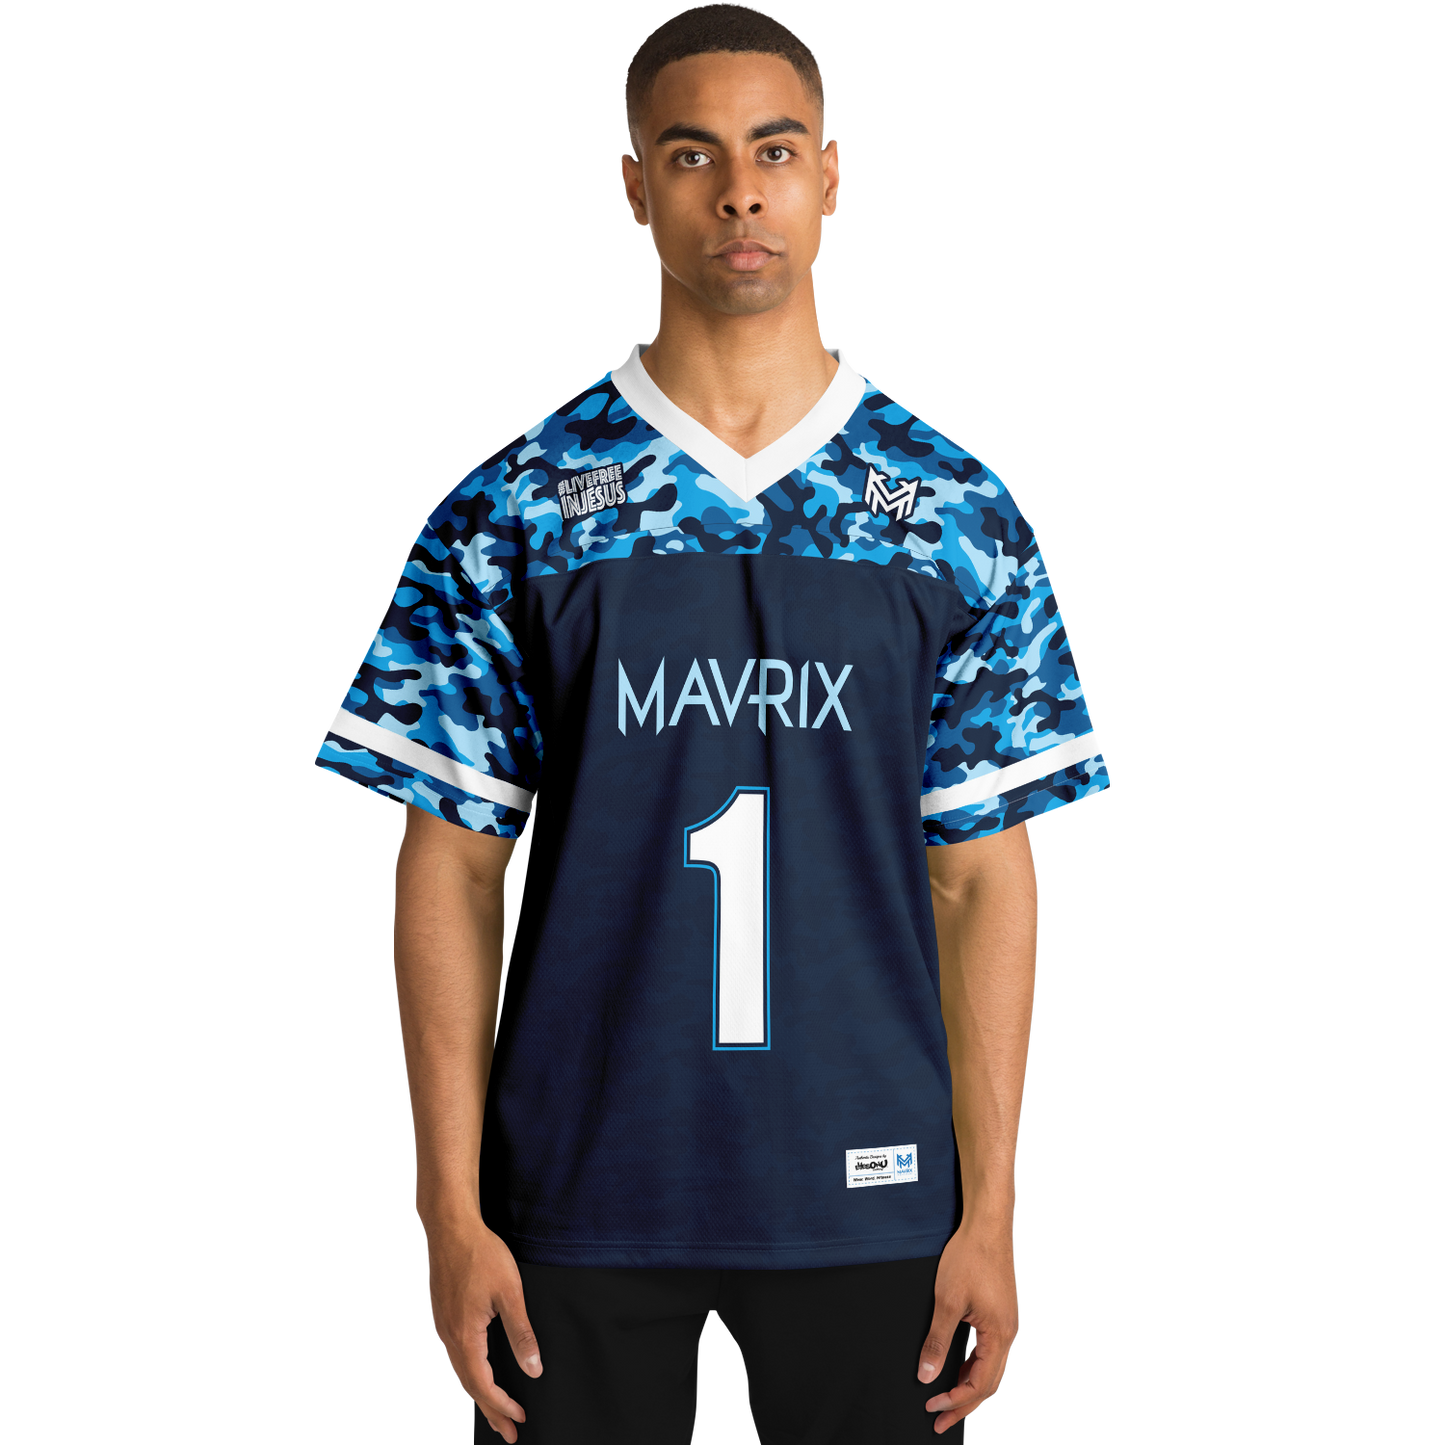 Mavrix Blue Camo Football Jersey